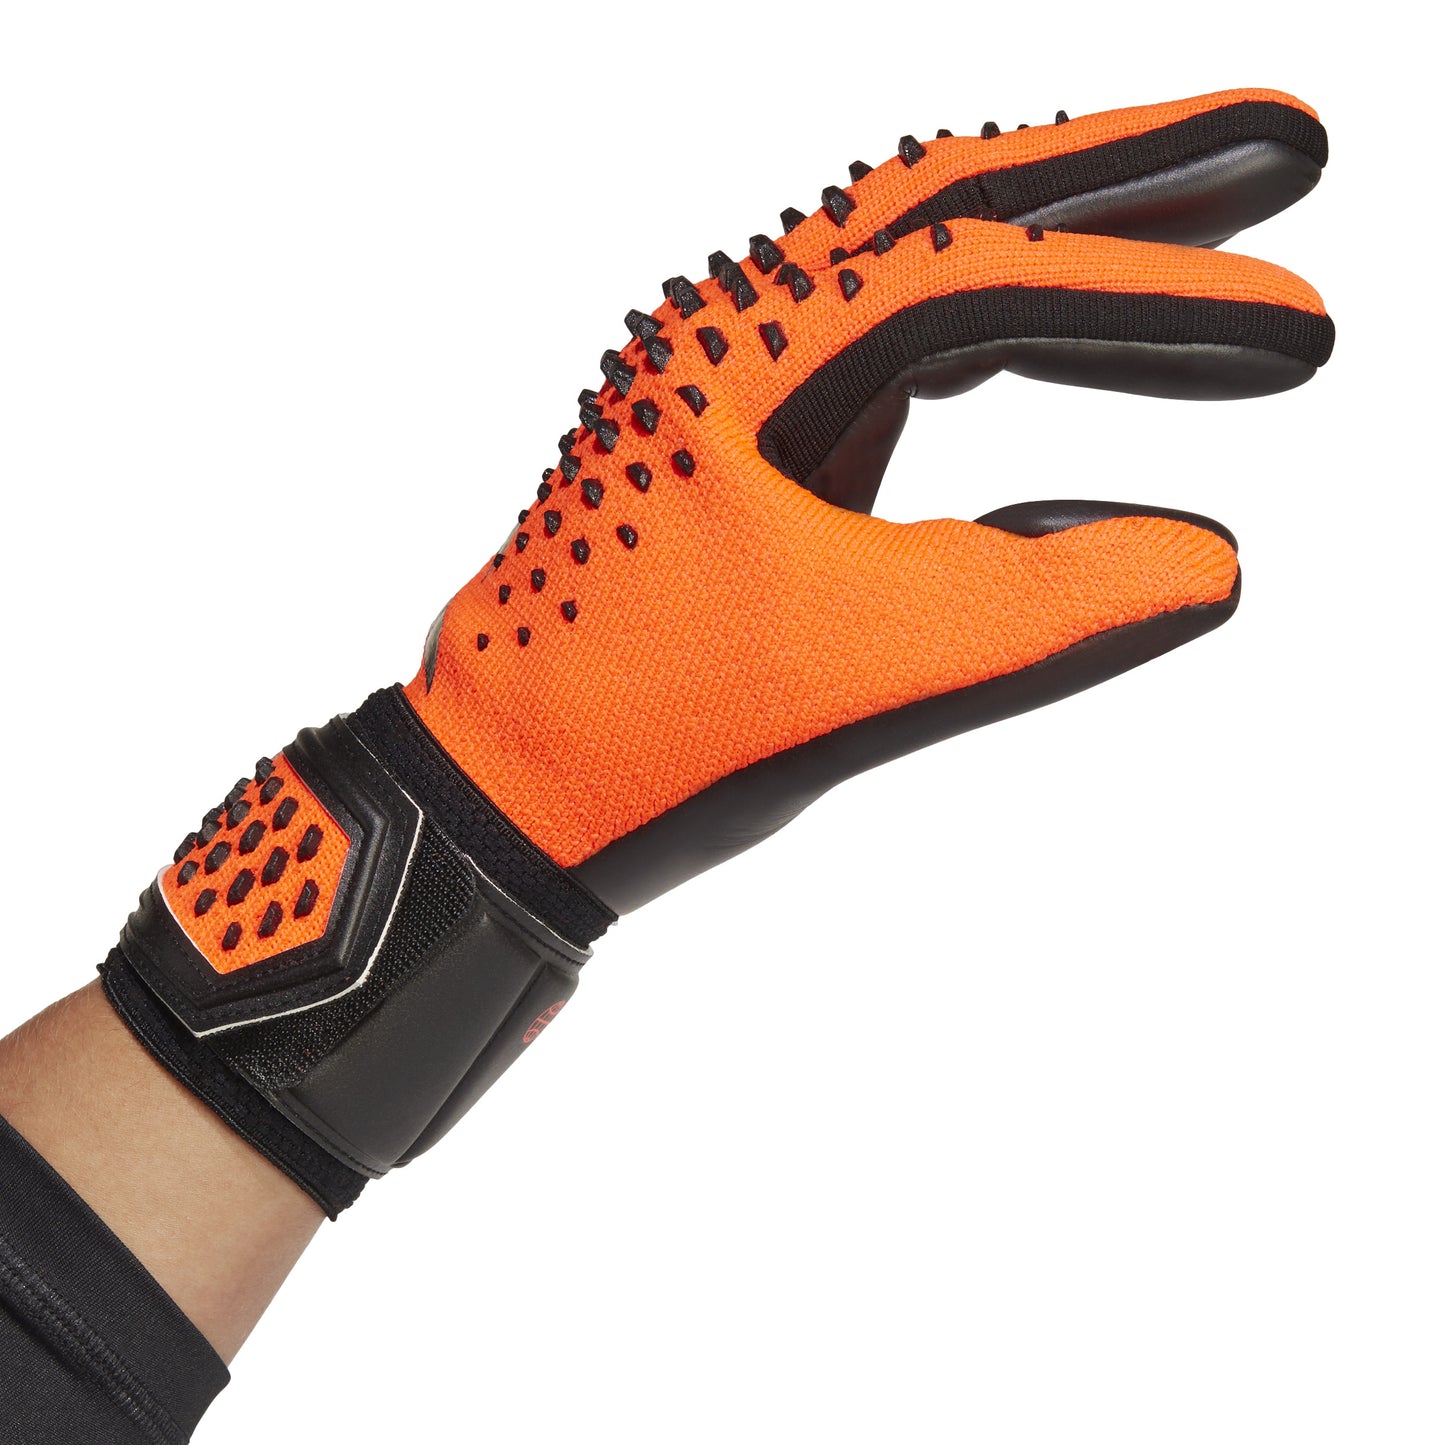 adidas Predator GL League Gk Goalkeeper Gloves Orange Black